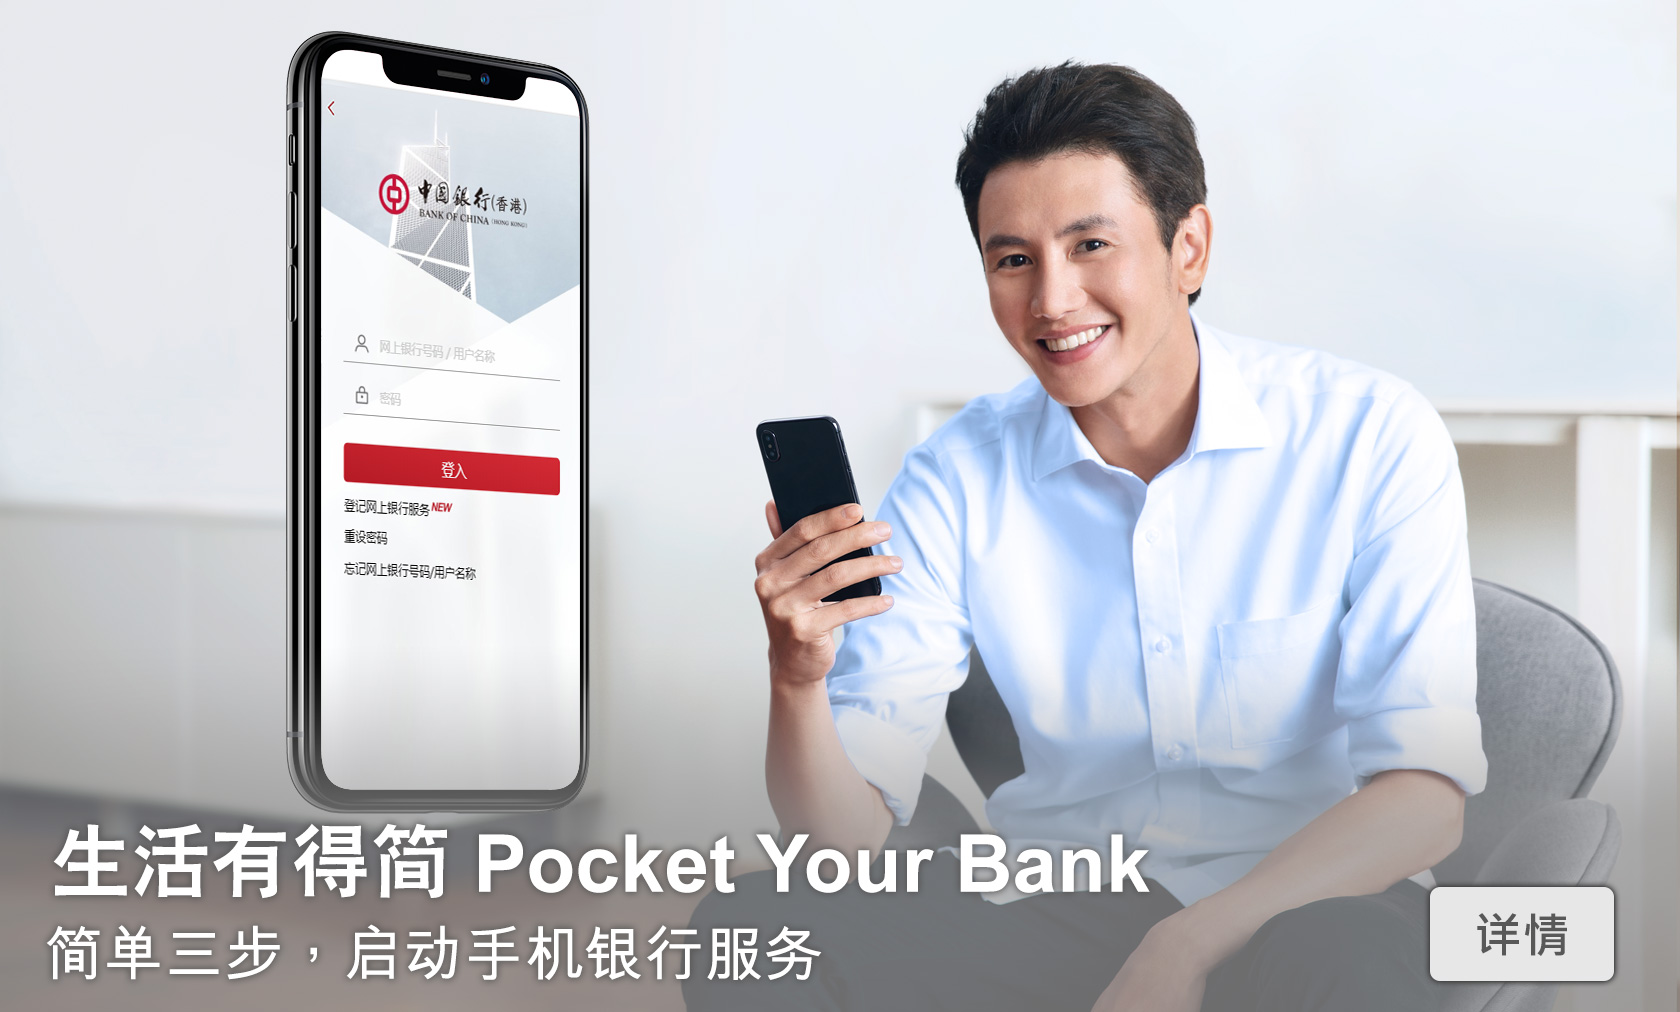 生活有得简 Pocket Your Bank
        简单三步，启动手机银行服务